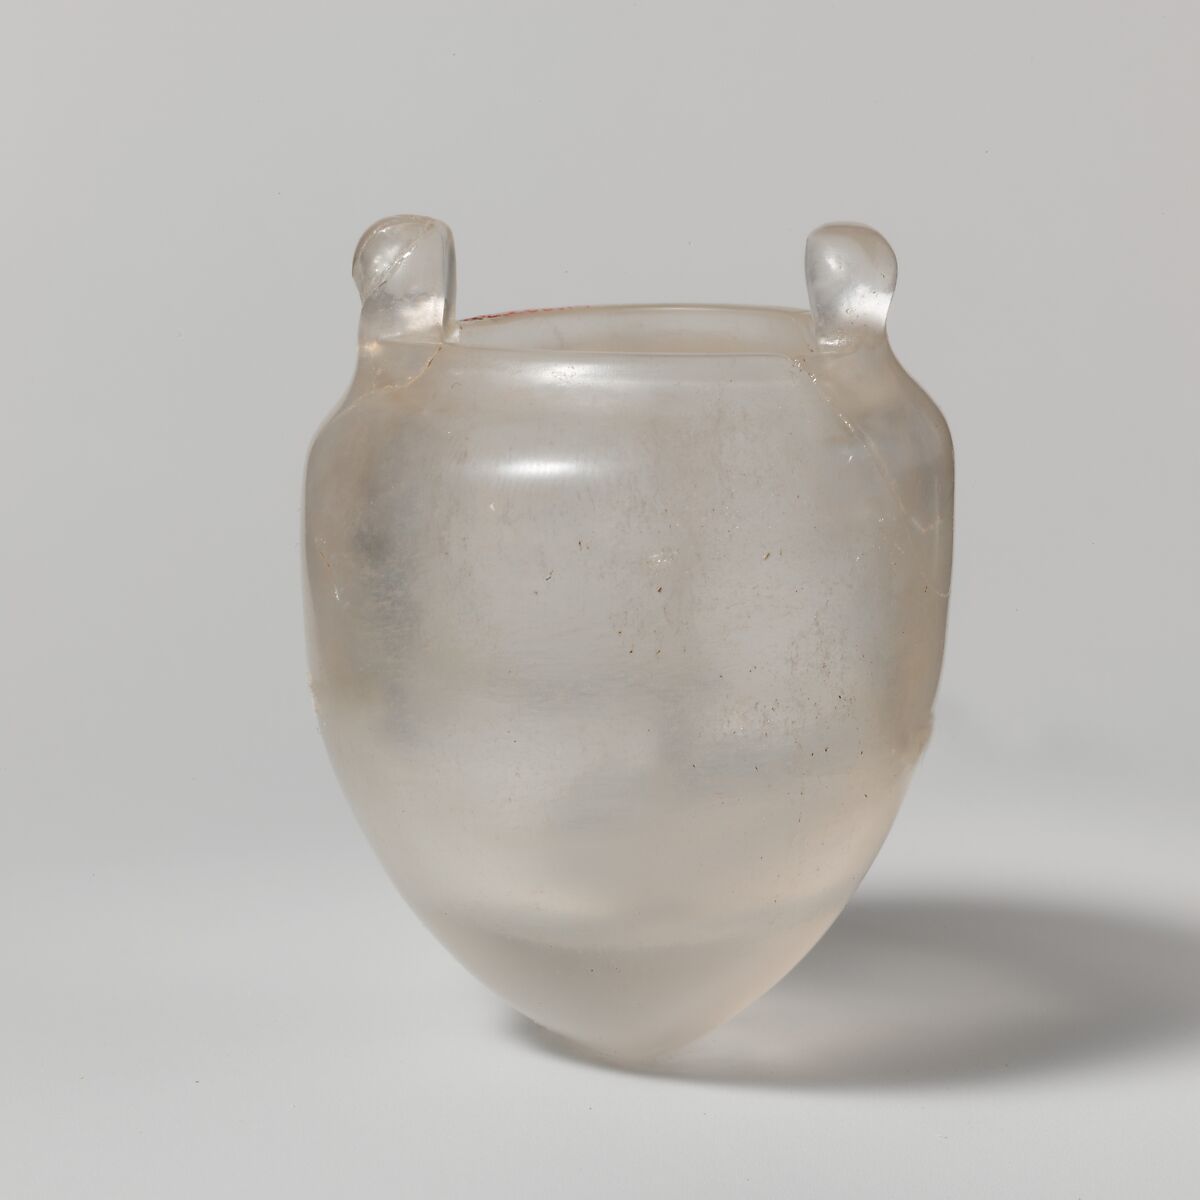 Rock-crystal ovoid vessel with wide mouth, Rock crystal, Greek, Eastern Mediterranean 